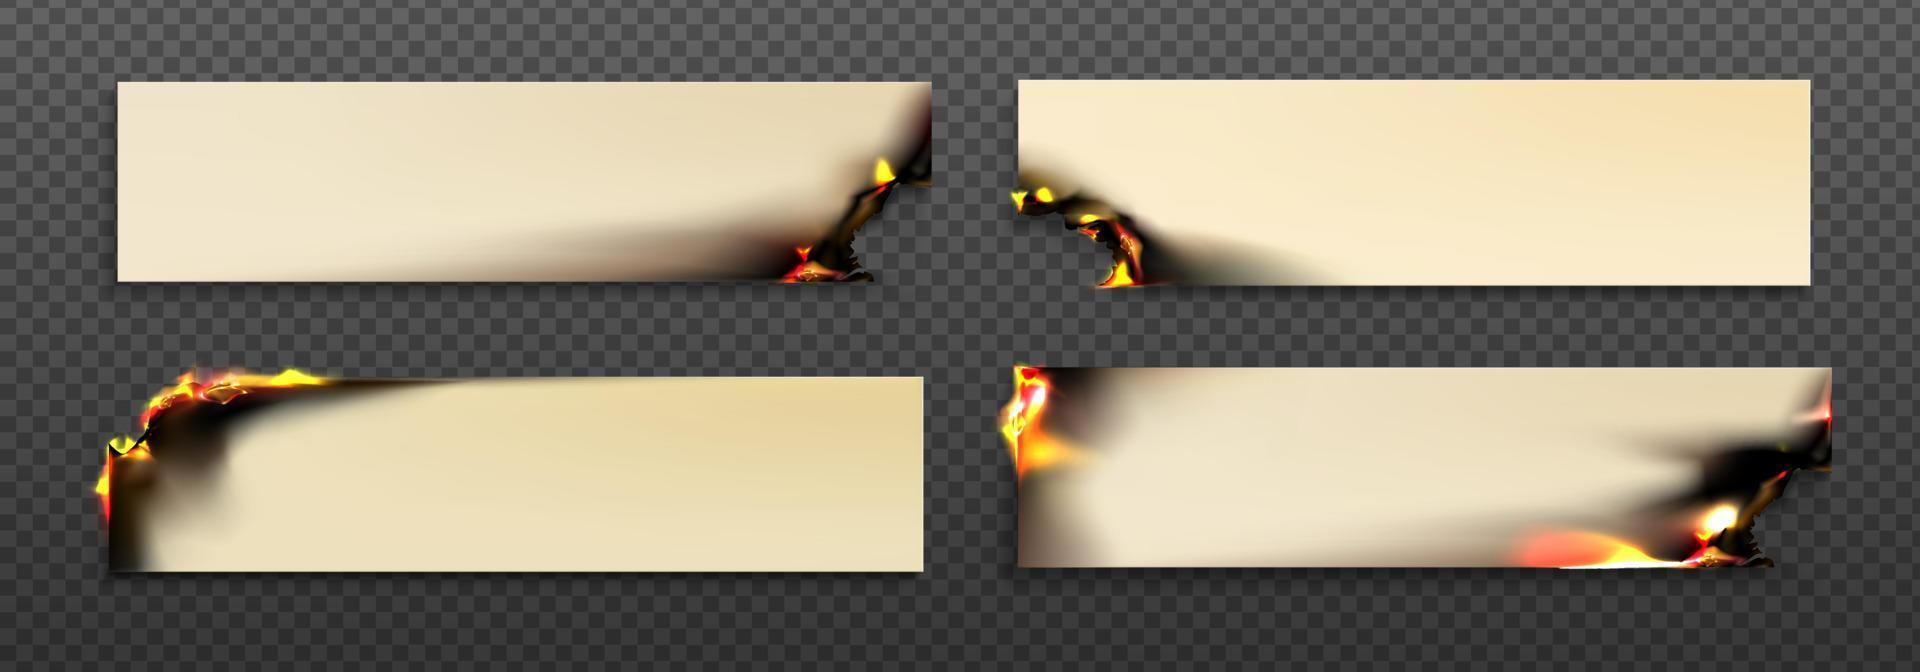 brinnande rektangel papper ark med brand vektor